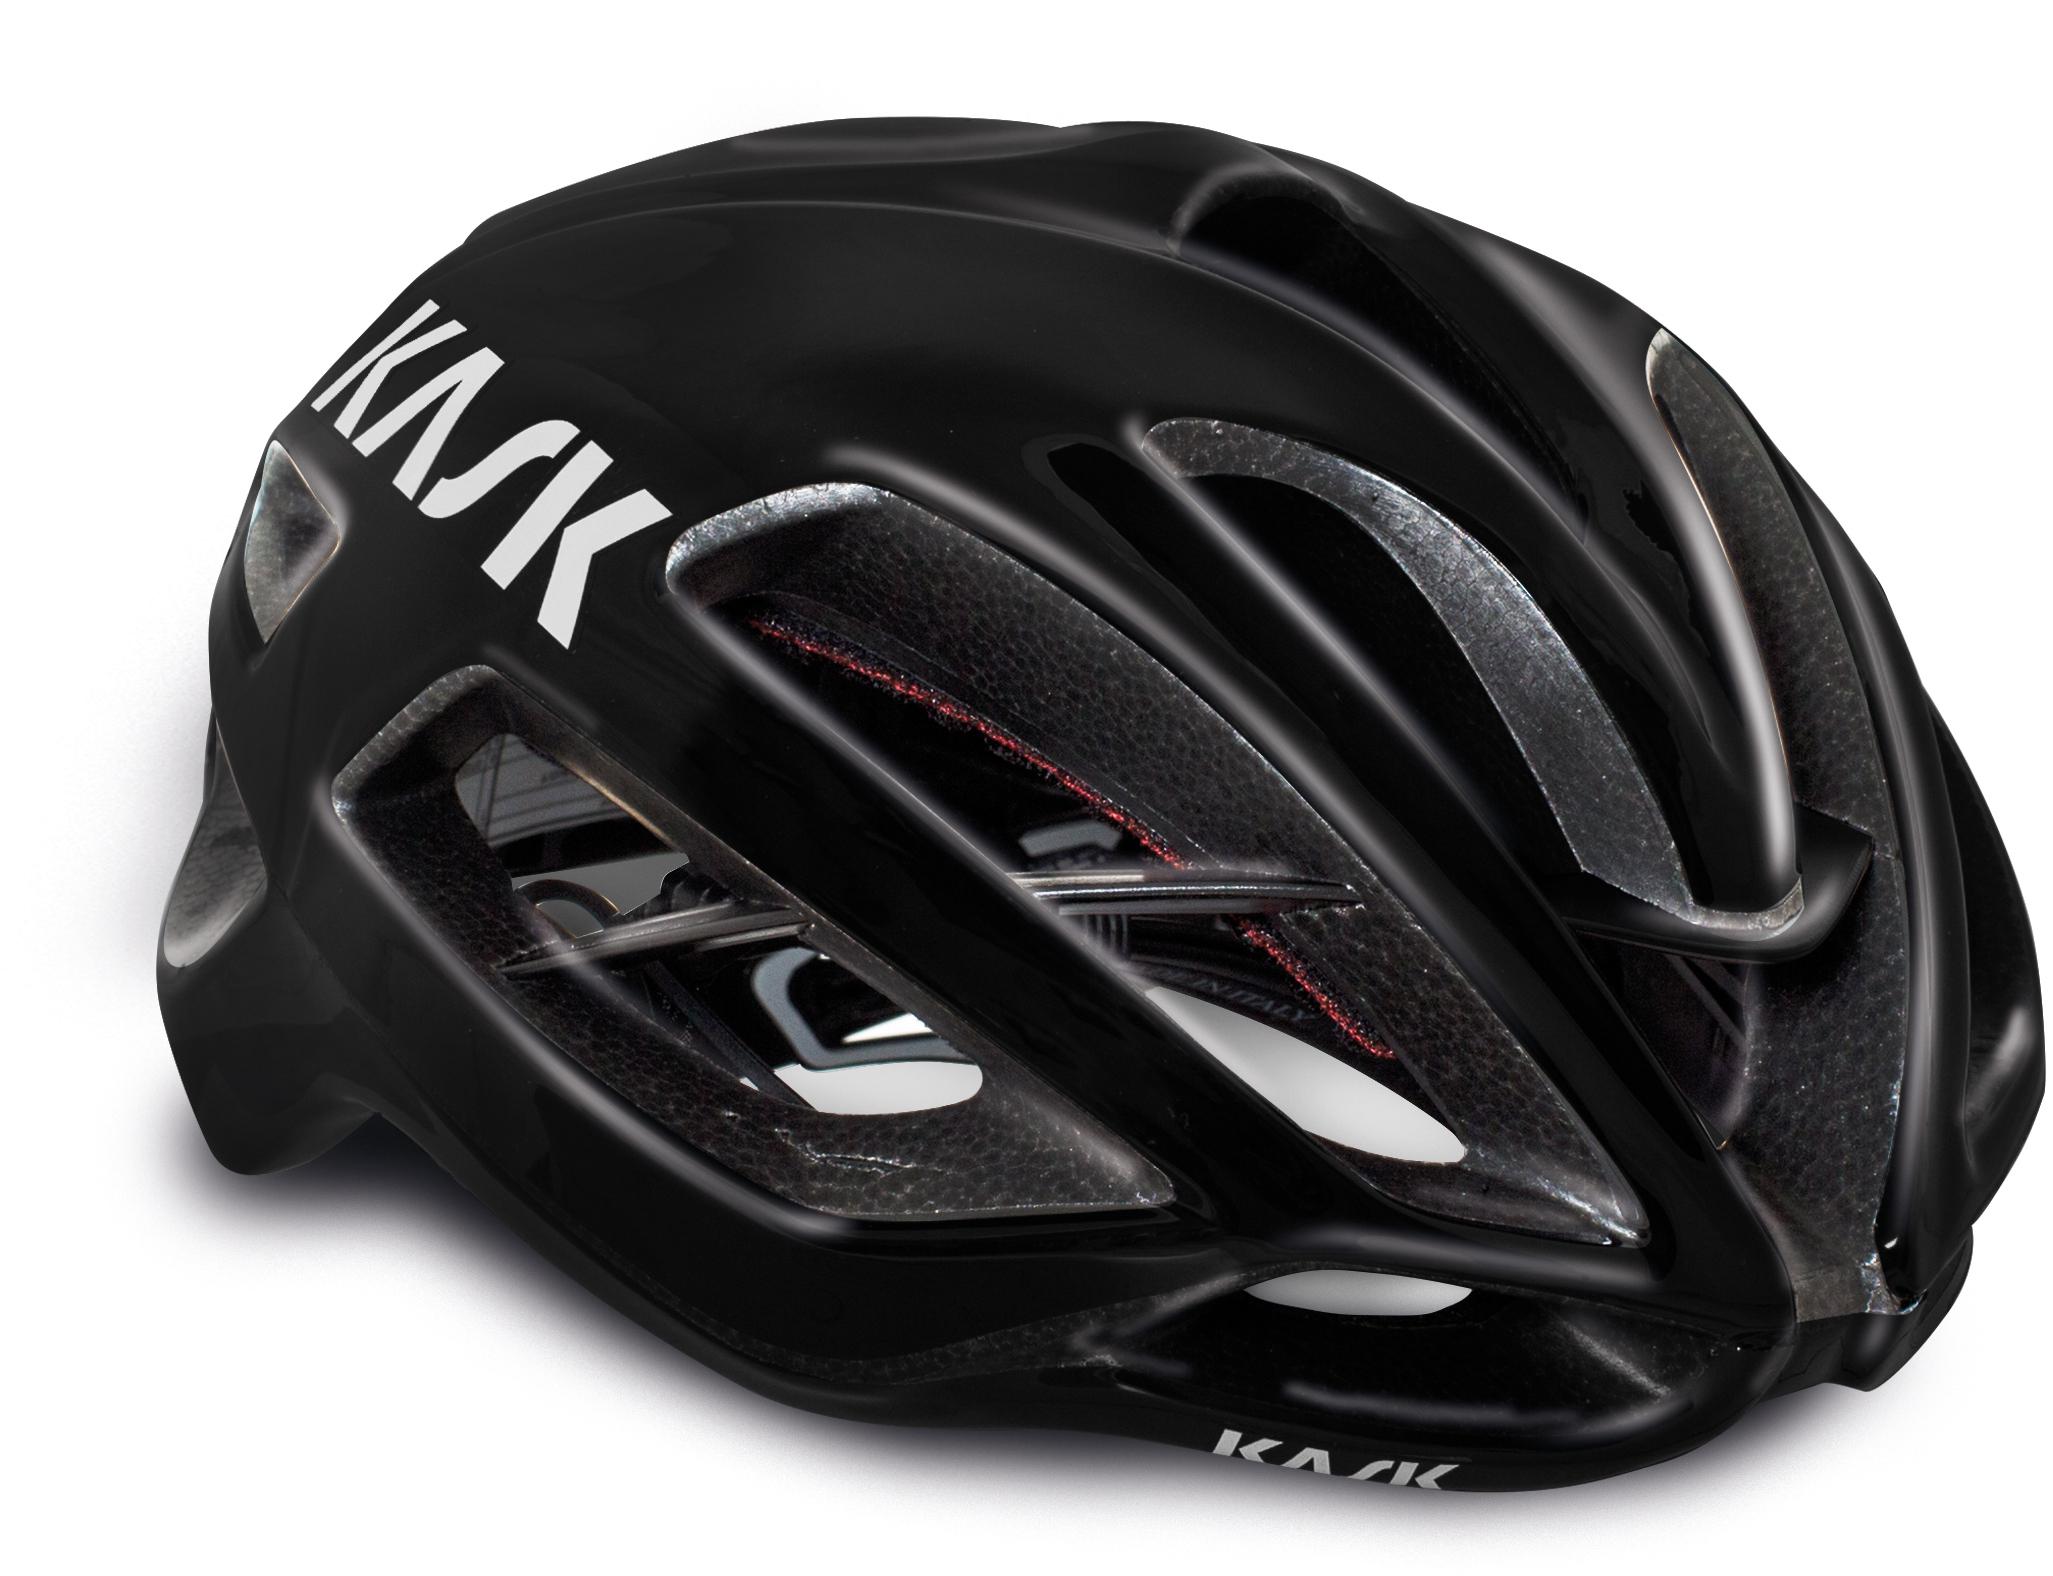 Kask Protone Wg11 Road Helmet, Black, Large